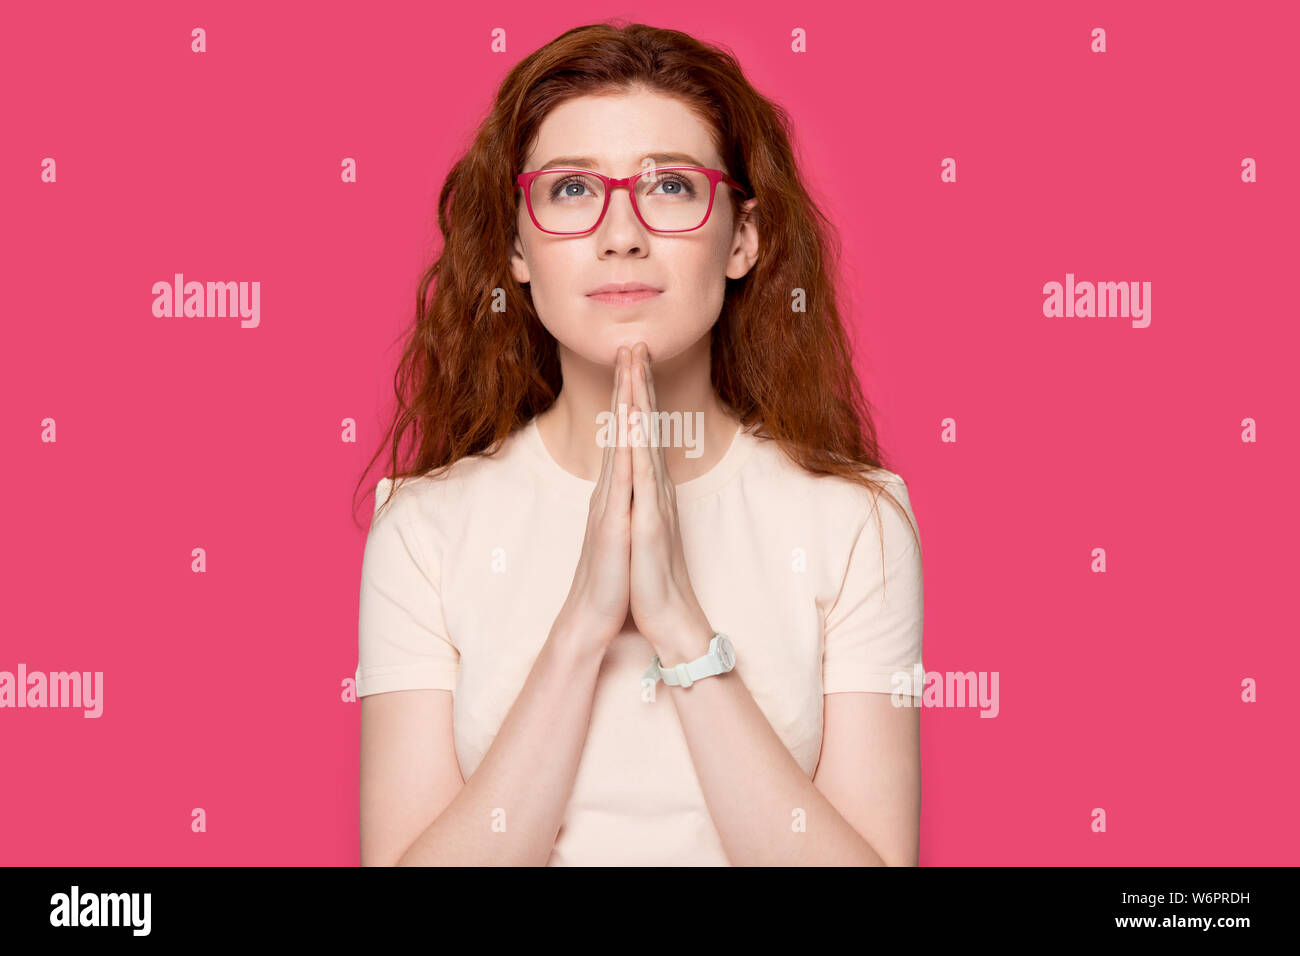 Sincera redhead donna tiene le mani insieme pregando pongono su rosa Foto Stock